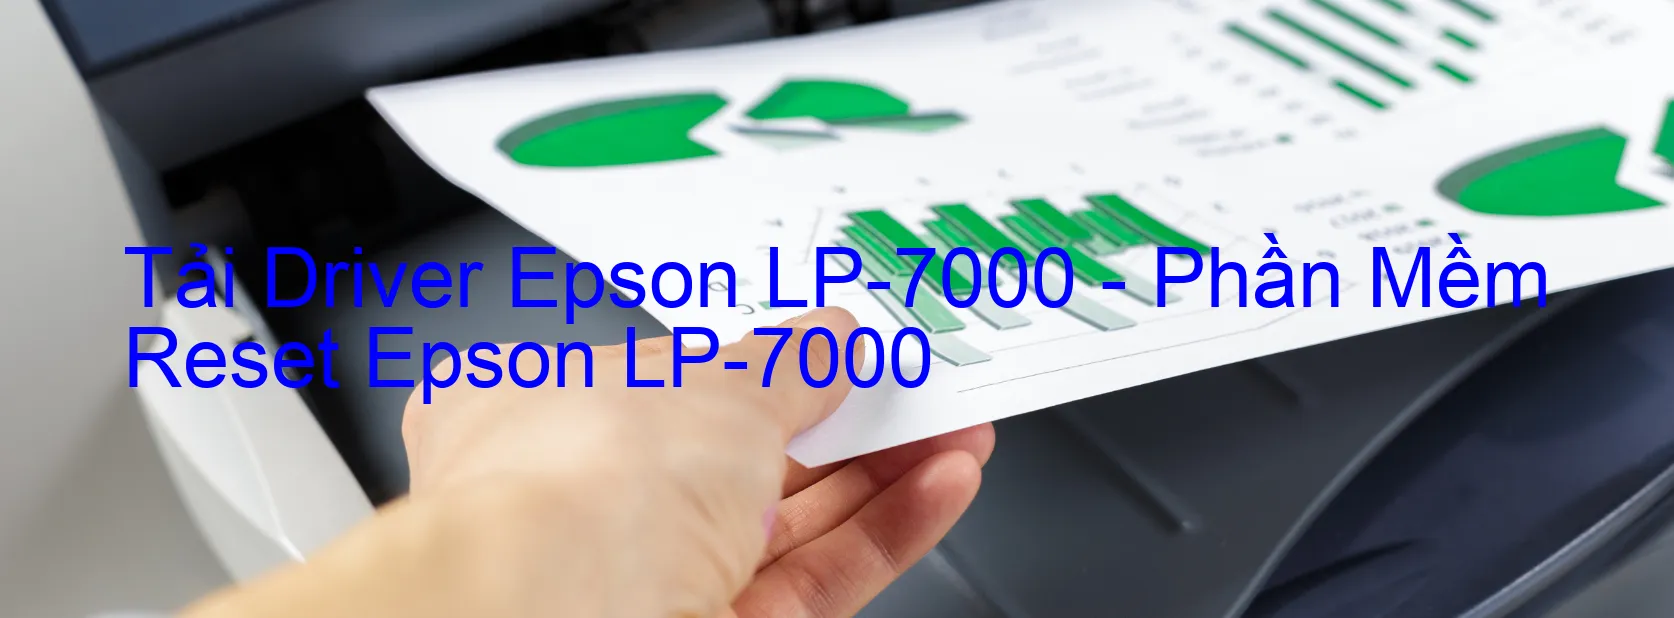 Driver Epson LP-7000, Phần Mềm Reset Epson LP-7000